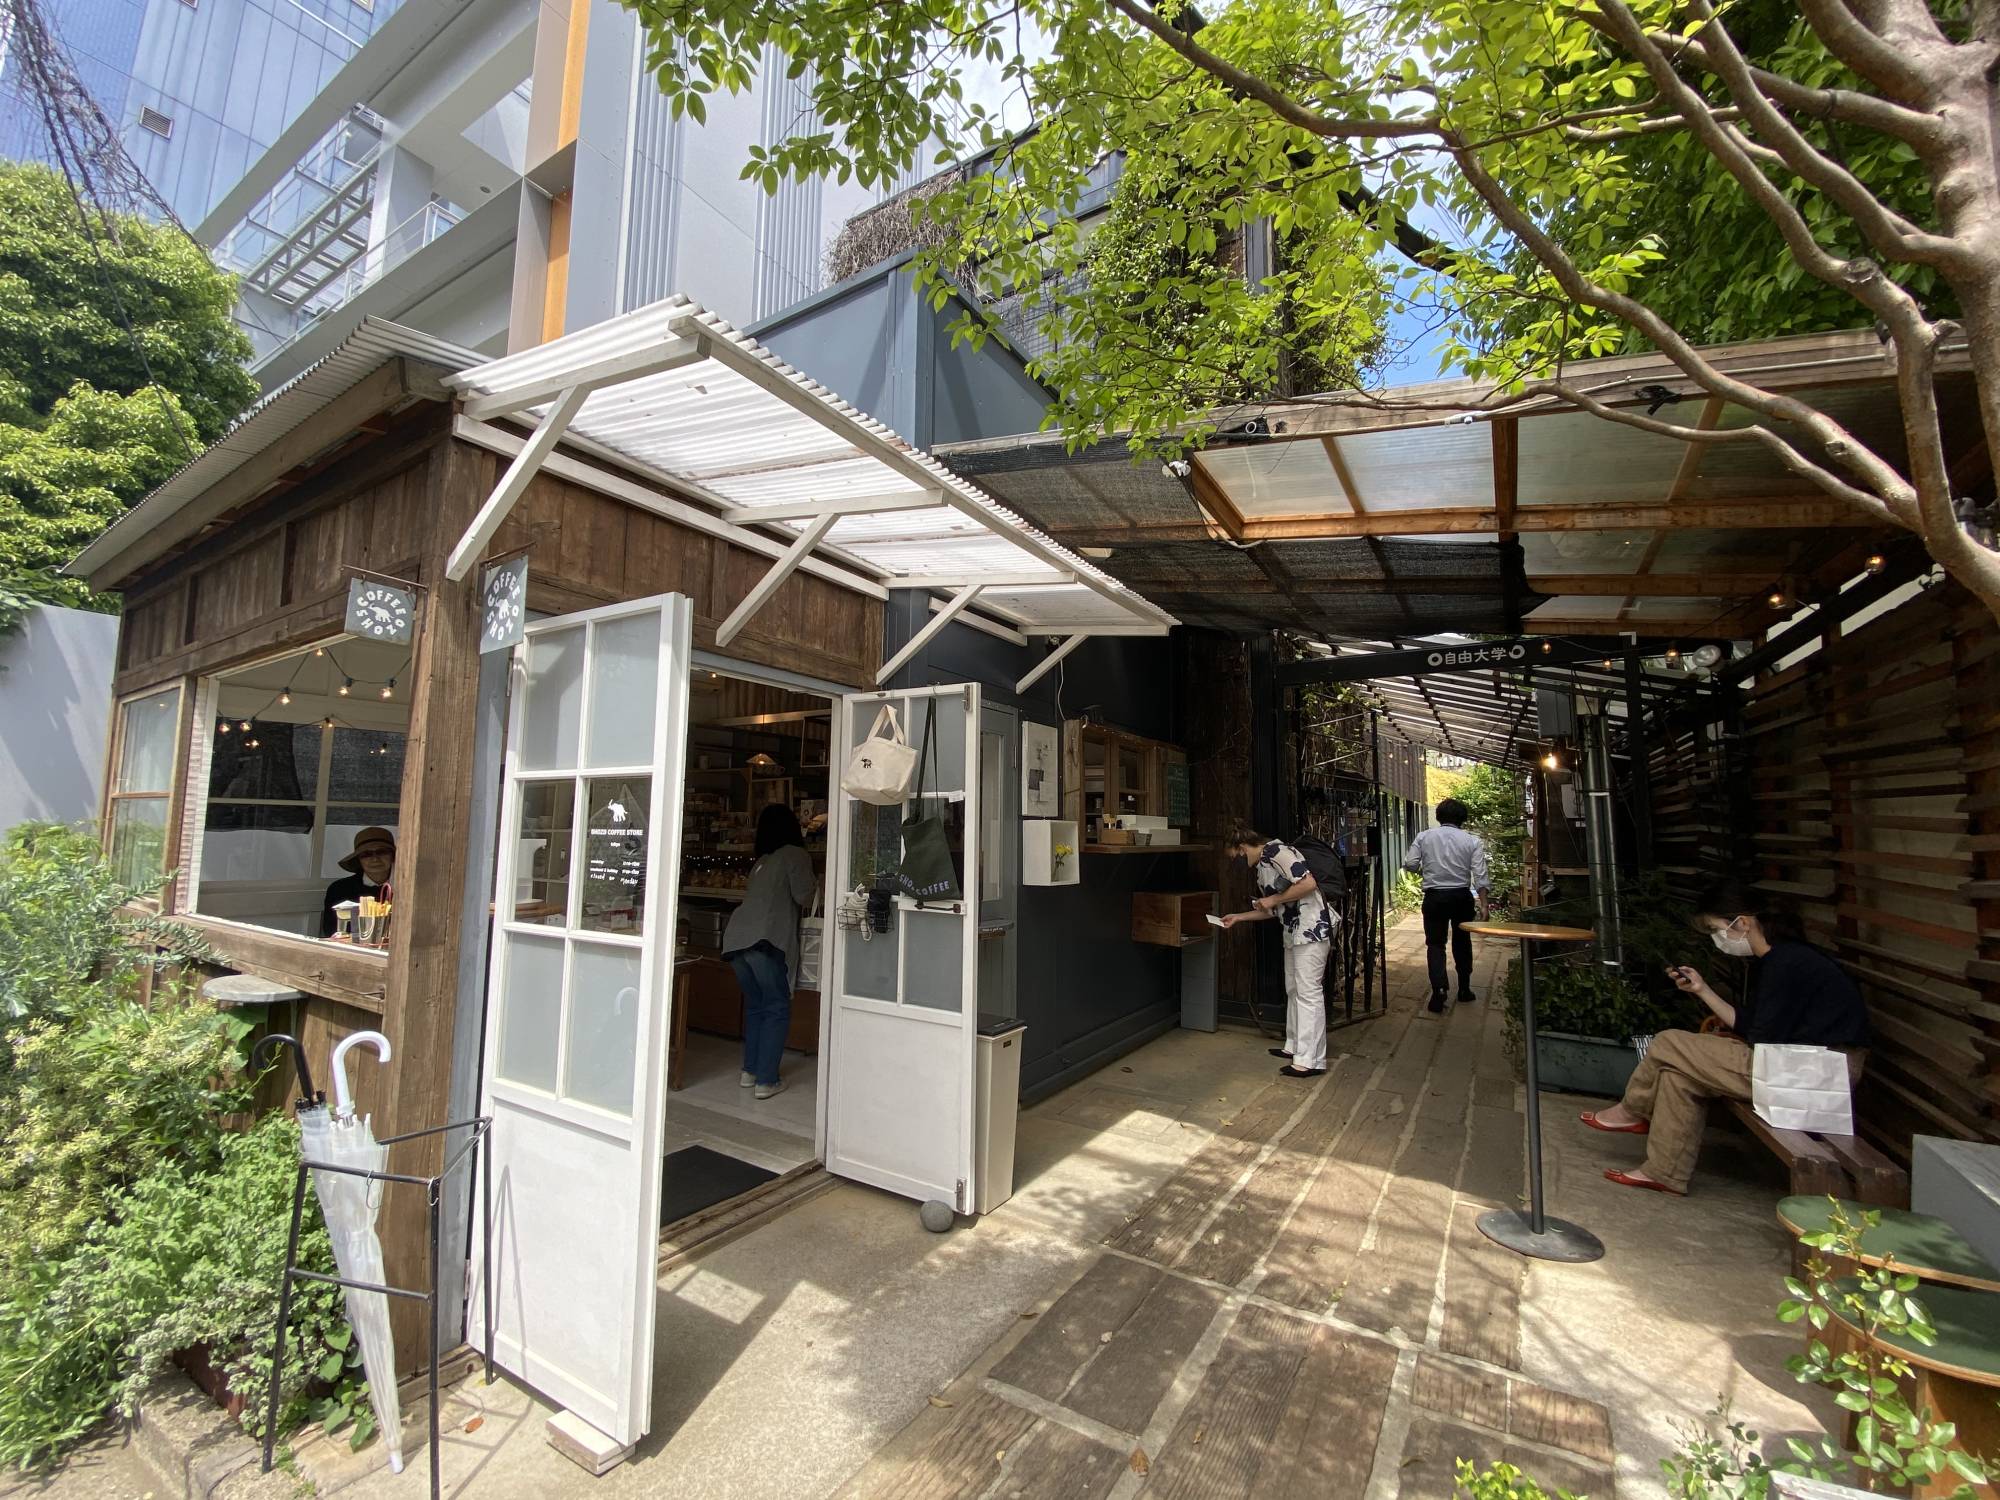 Japan Cafe at Sawgrass Mills - Picture of Japan Cafe, Fort